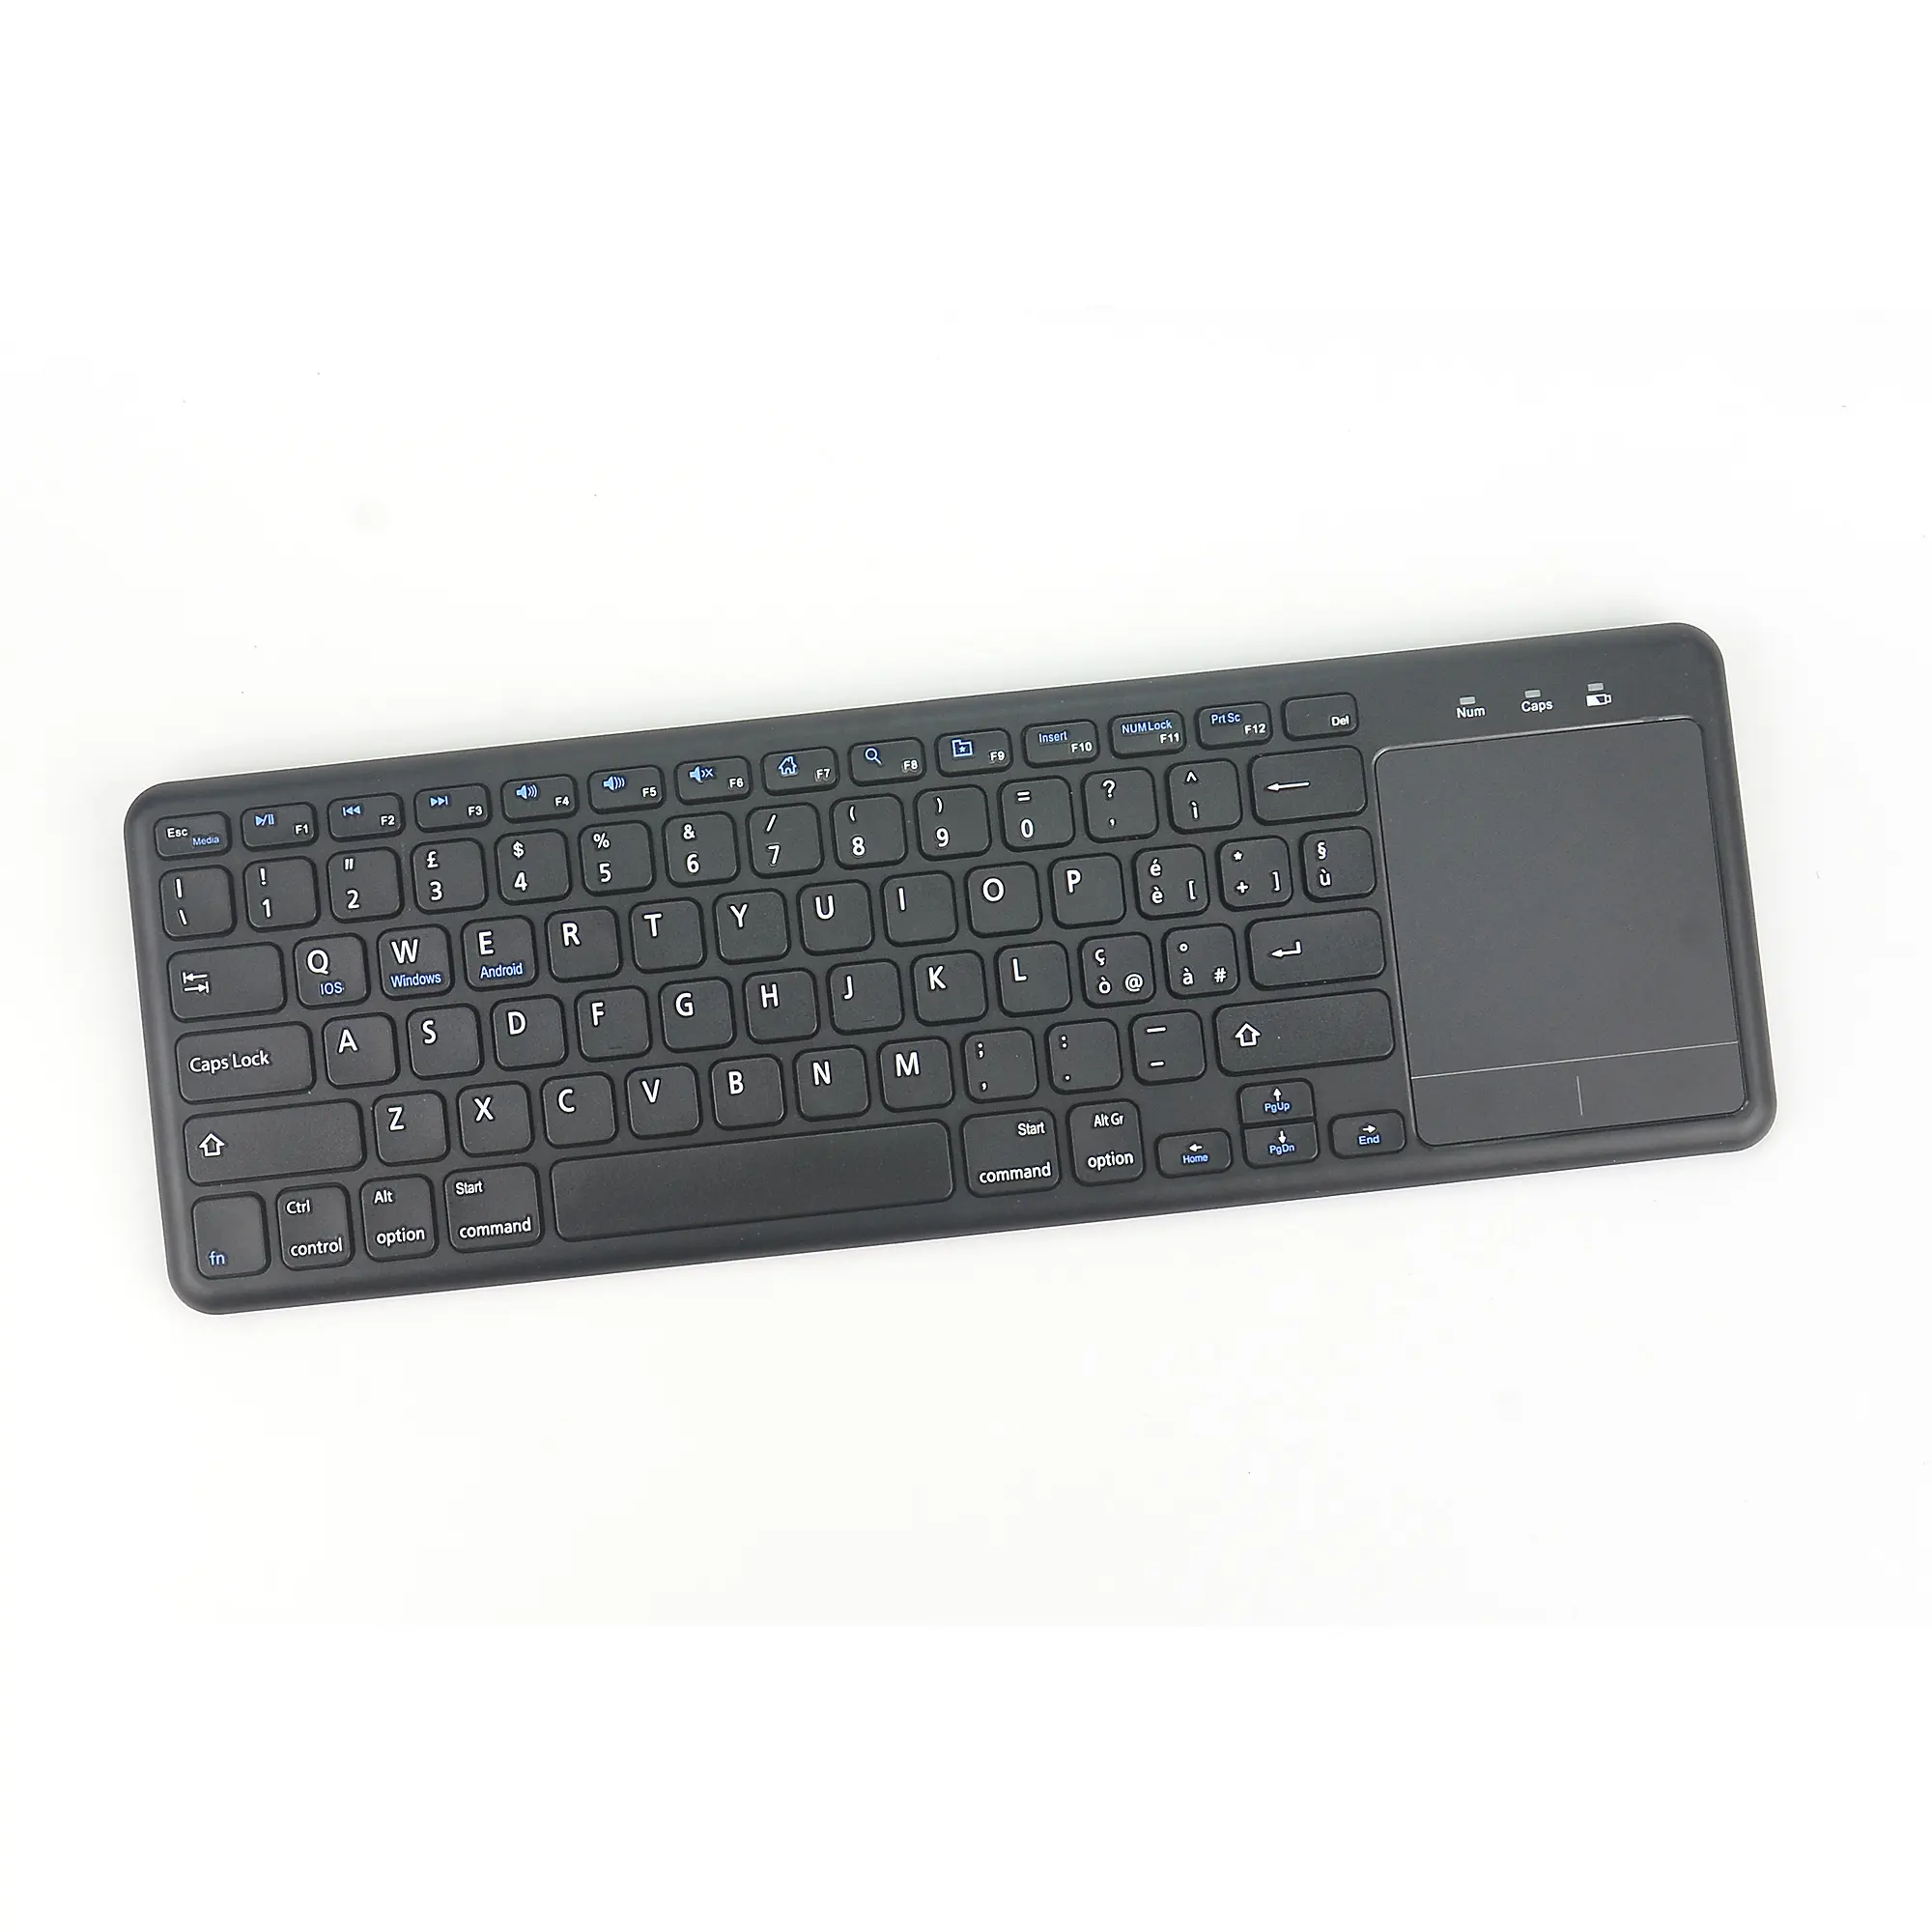 OEM لوحة المفاتيح اللاسلكية ل tcl الروبوت التلفزيون الذكية لوحة المفاتيح مع لوحة اللمس